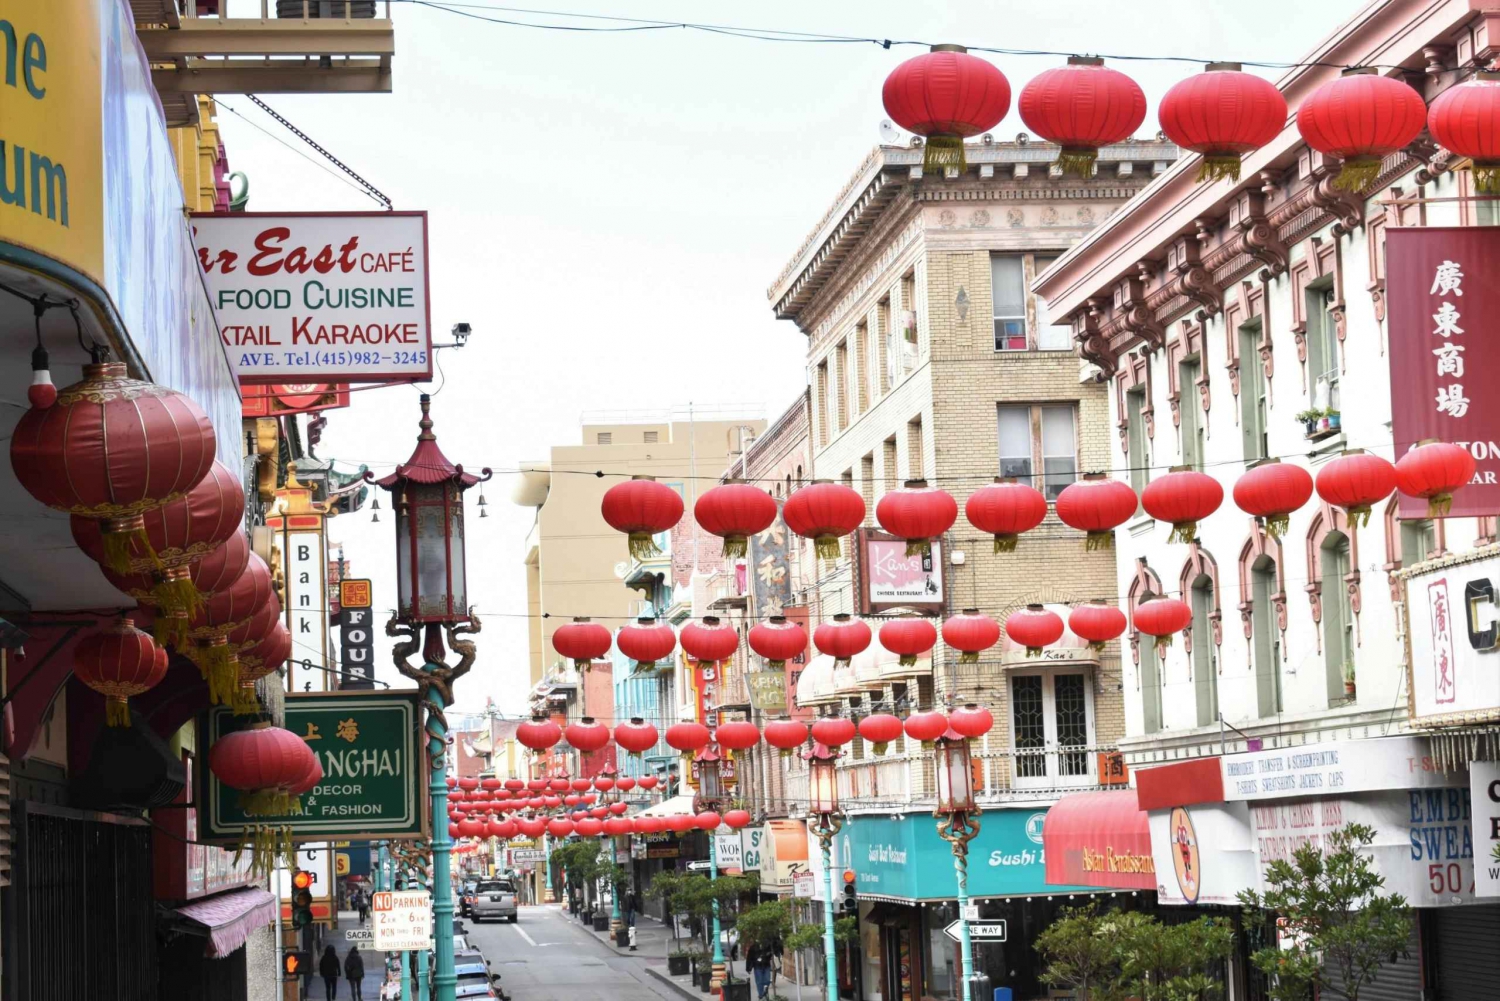 San Francisco: Chinatown Food and History Walking Tour